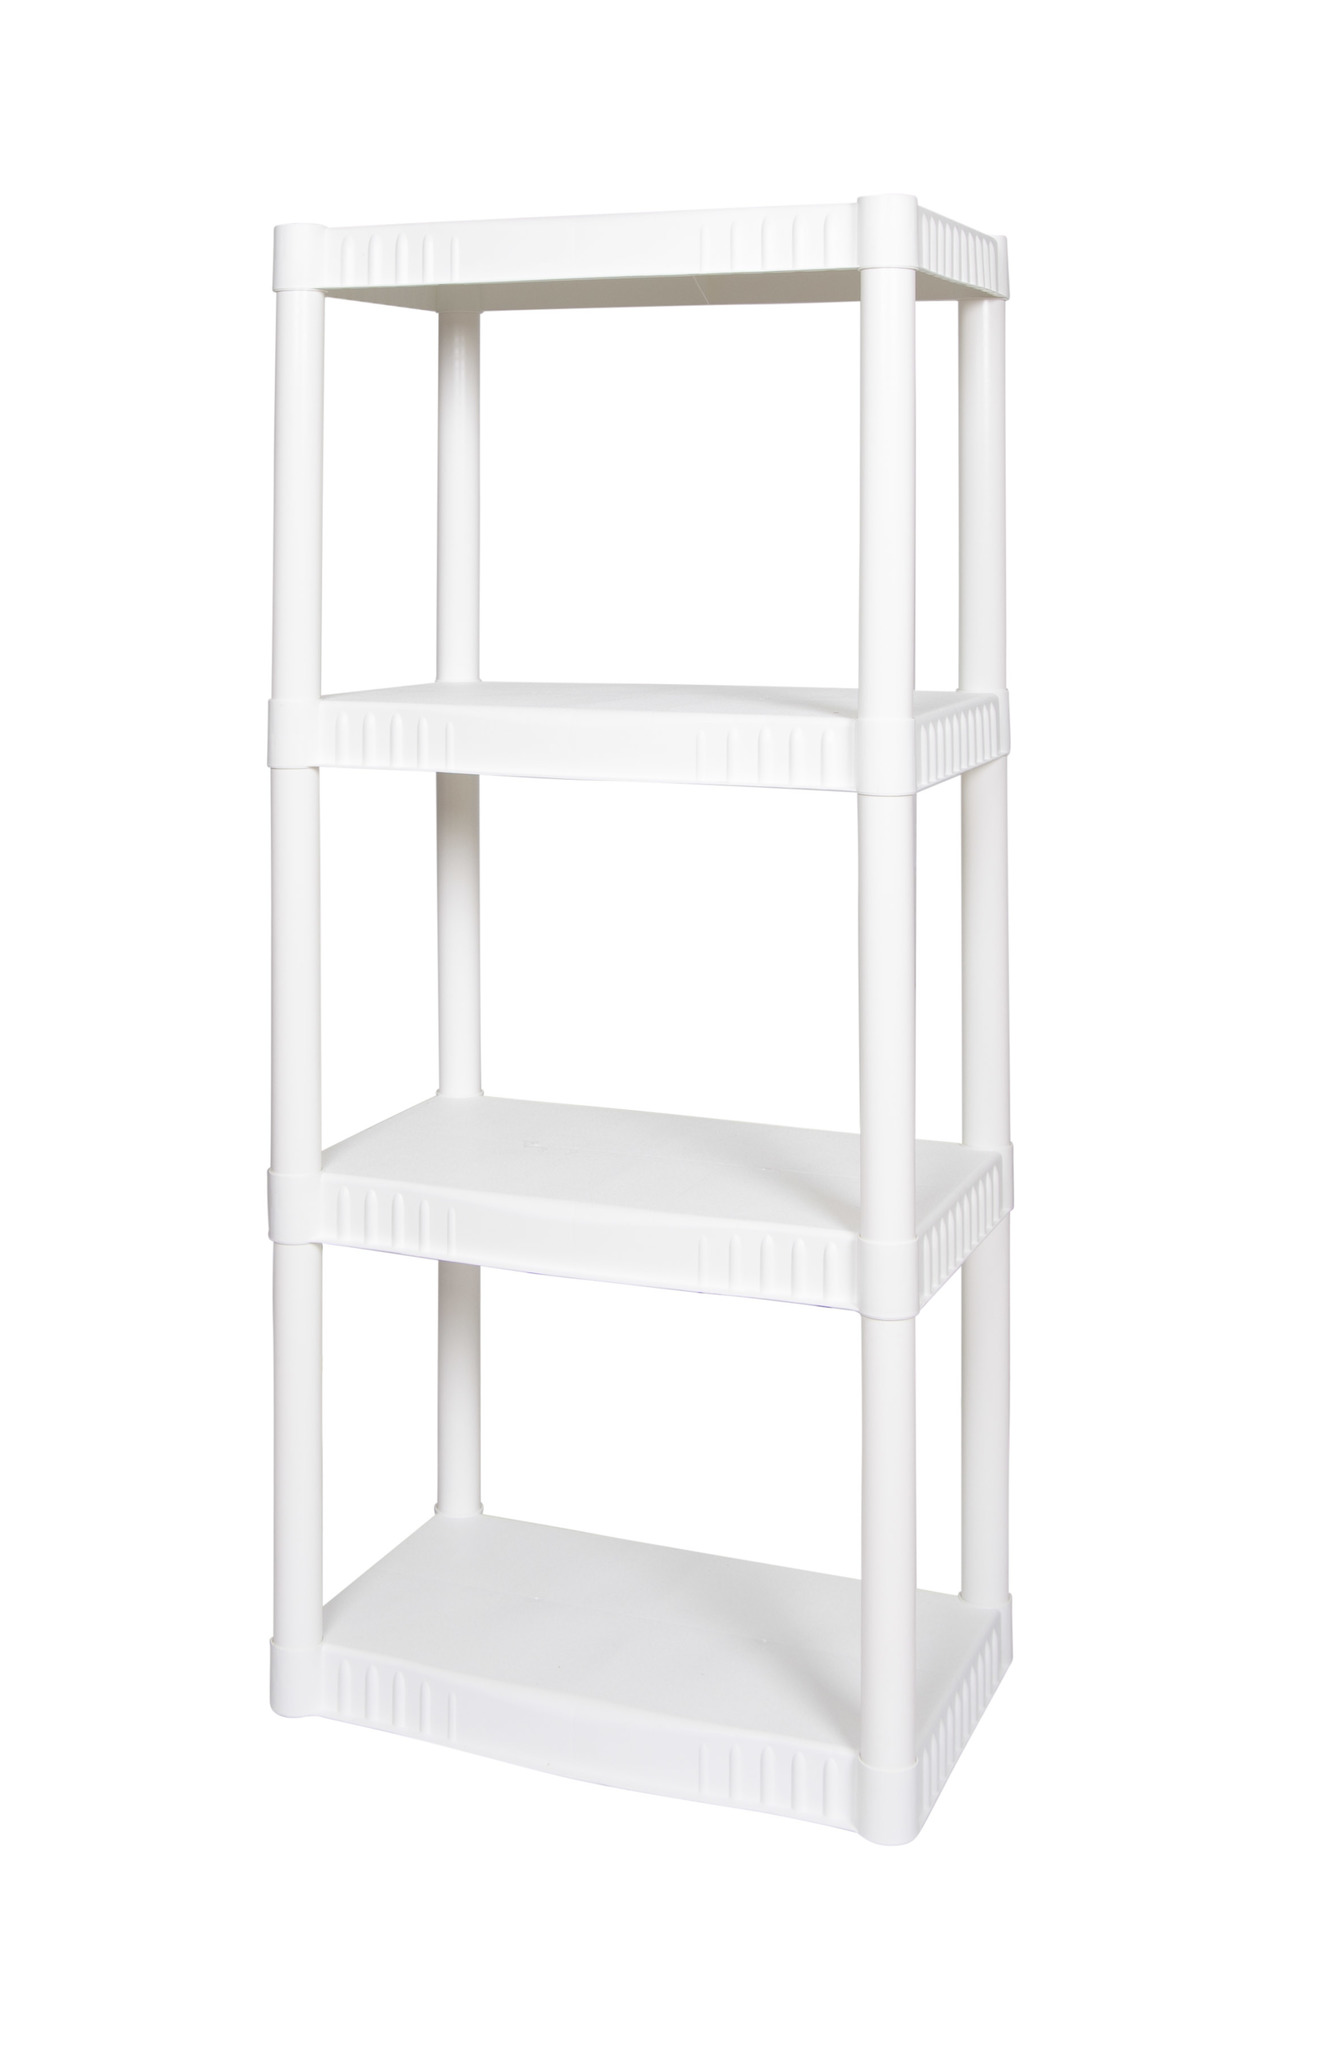 Plano 22"W x 14"D x 48"H 4 Shelves Plastic Garage Shelf Unit, White, 200 lb Capacity - image 2 of 2